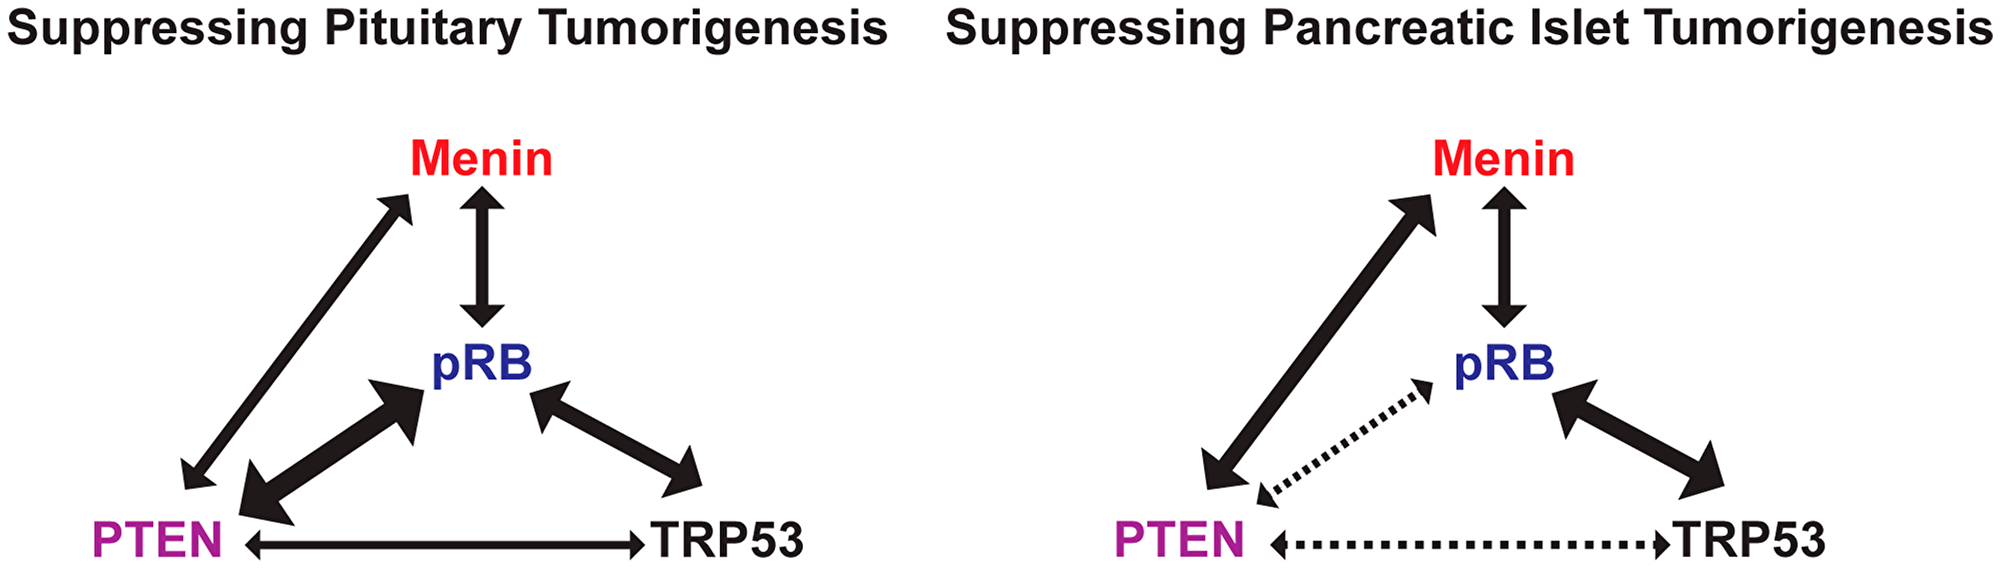 Genetic interactions between TSGs in suppressing pituitary and pancreatic islet tumorigenesis.